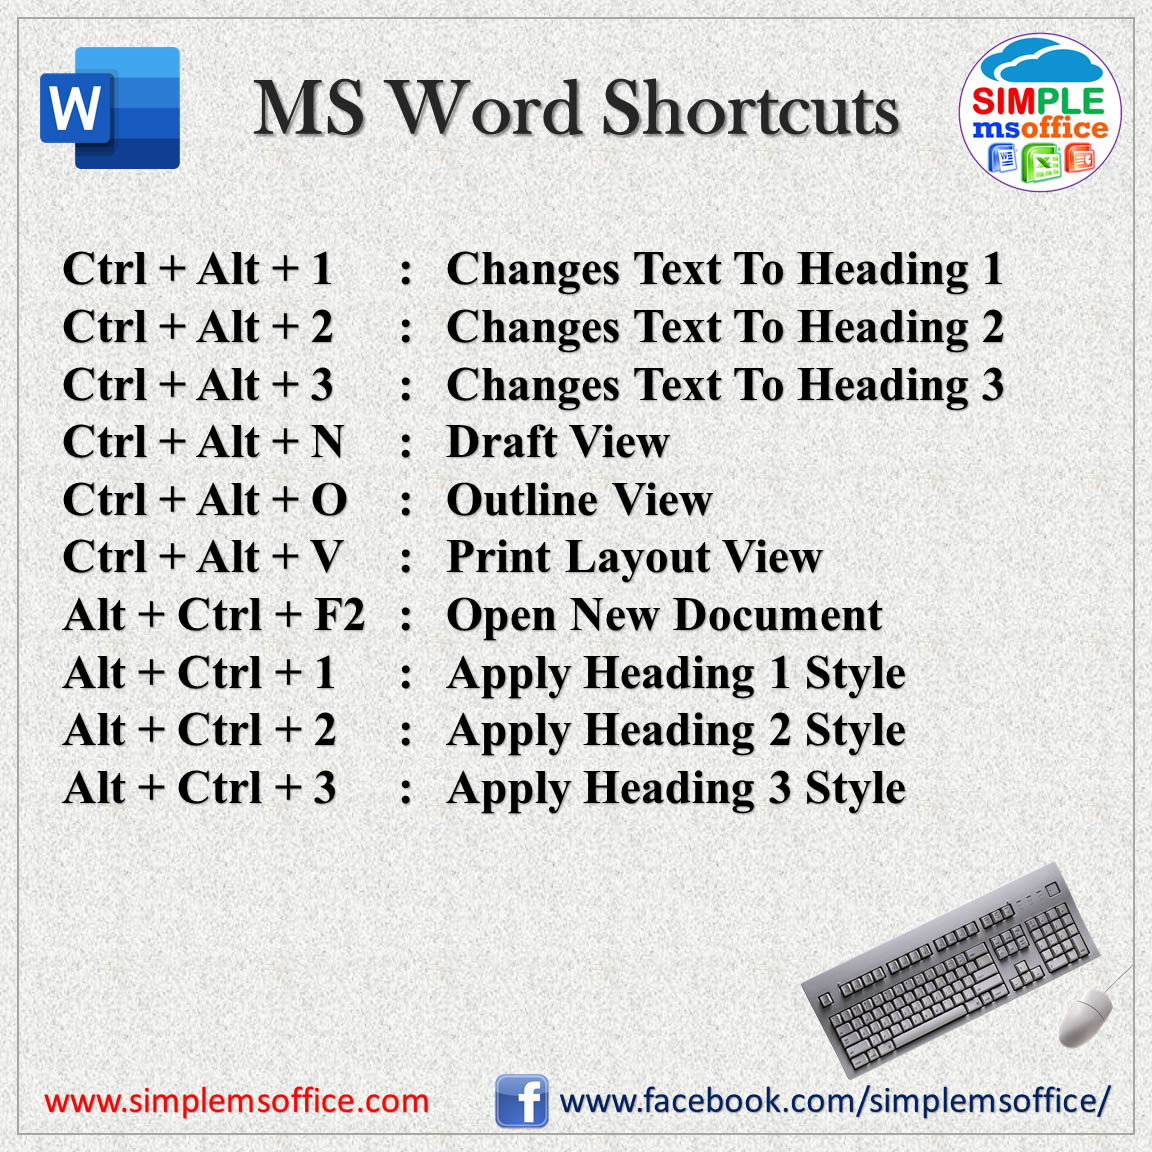 ms-word-shortcuts-09-simplemsoffice